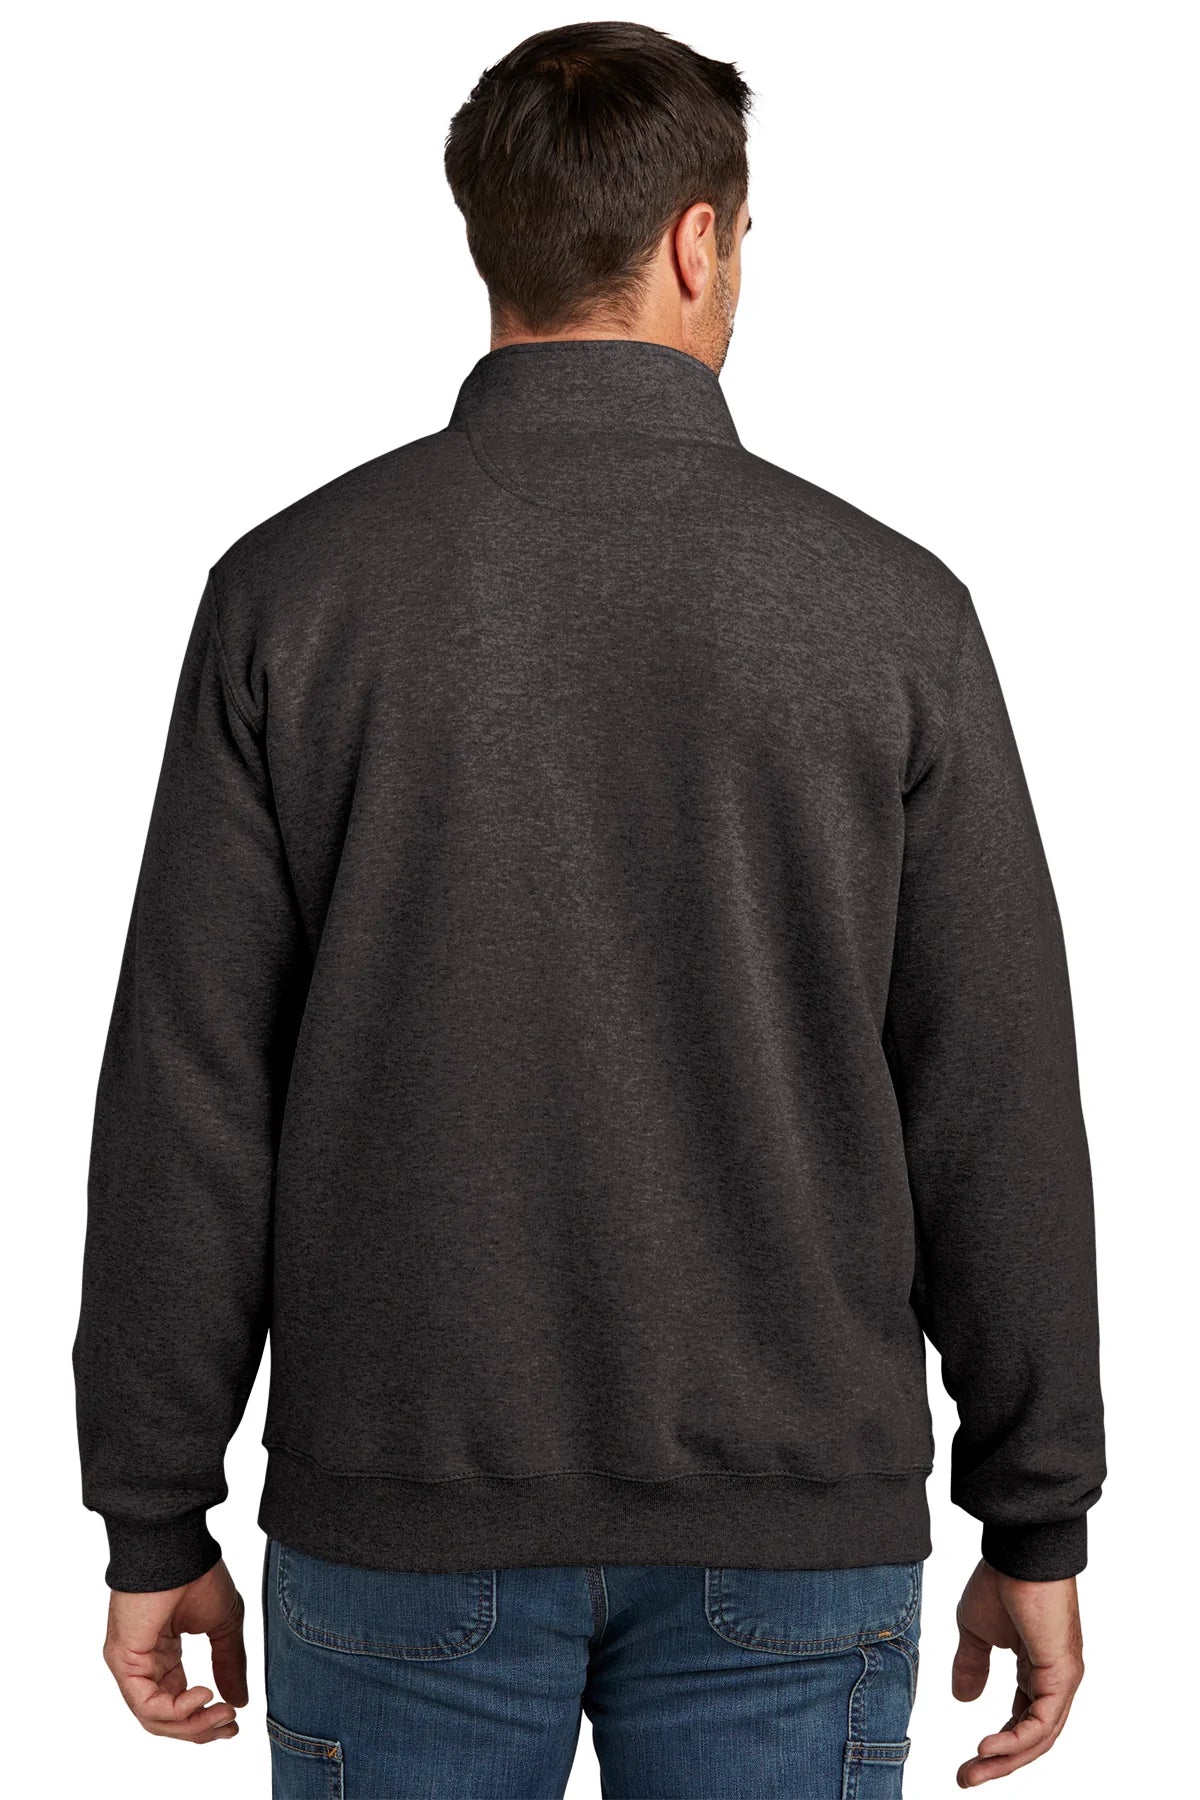 Carhartt Mock Neck Custom Sweatshirts, Carbon Heather